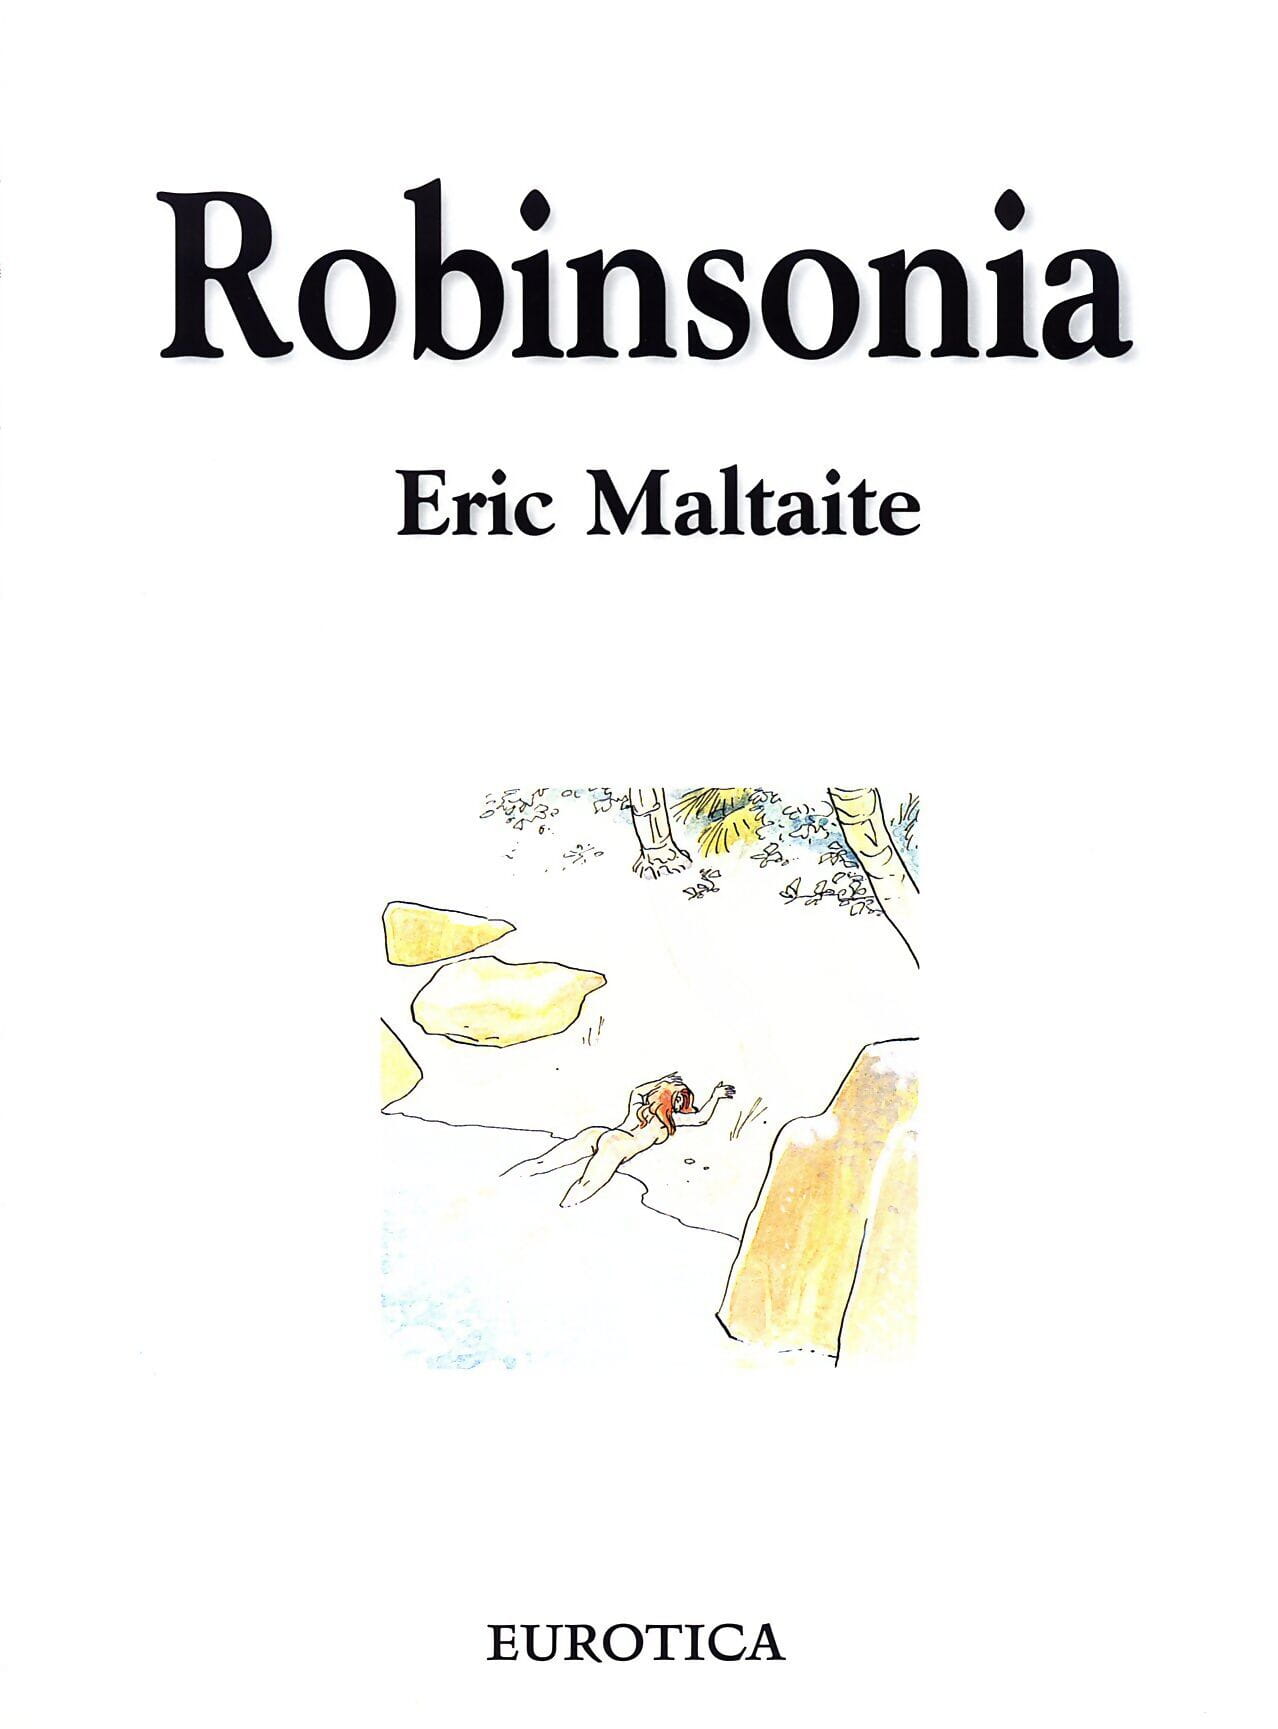 Robinsonia page 1